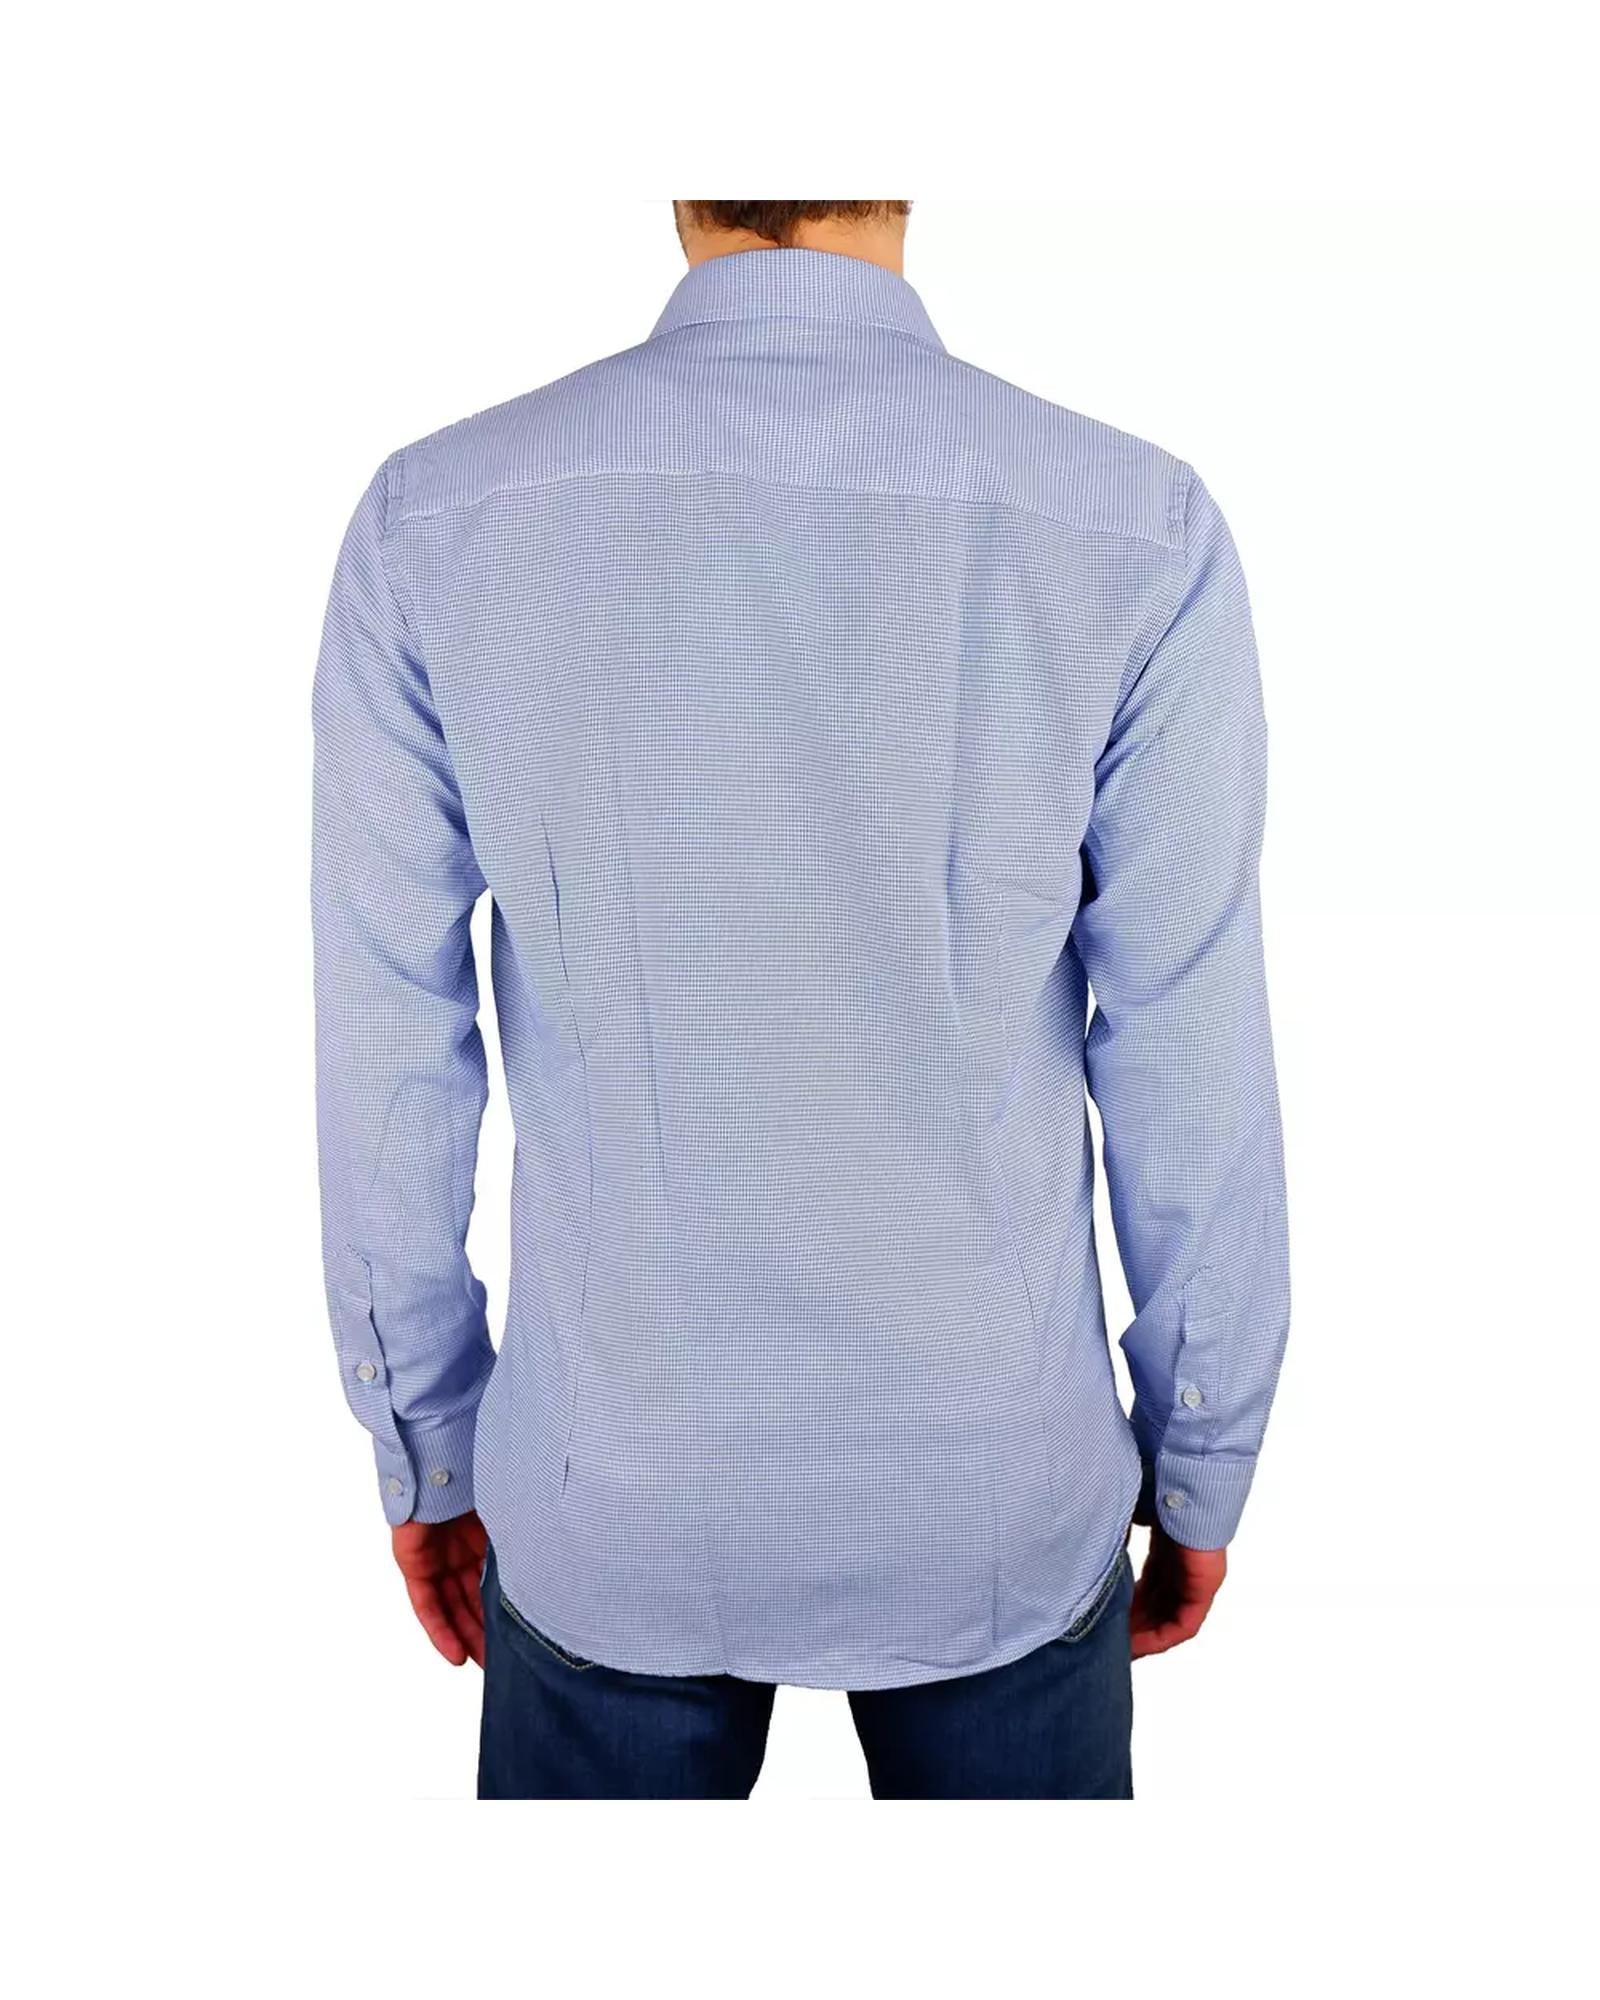 Houndstooth Textured Blue Cotton Shirt 43 IT Men